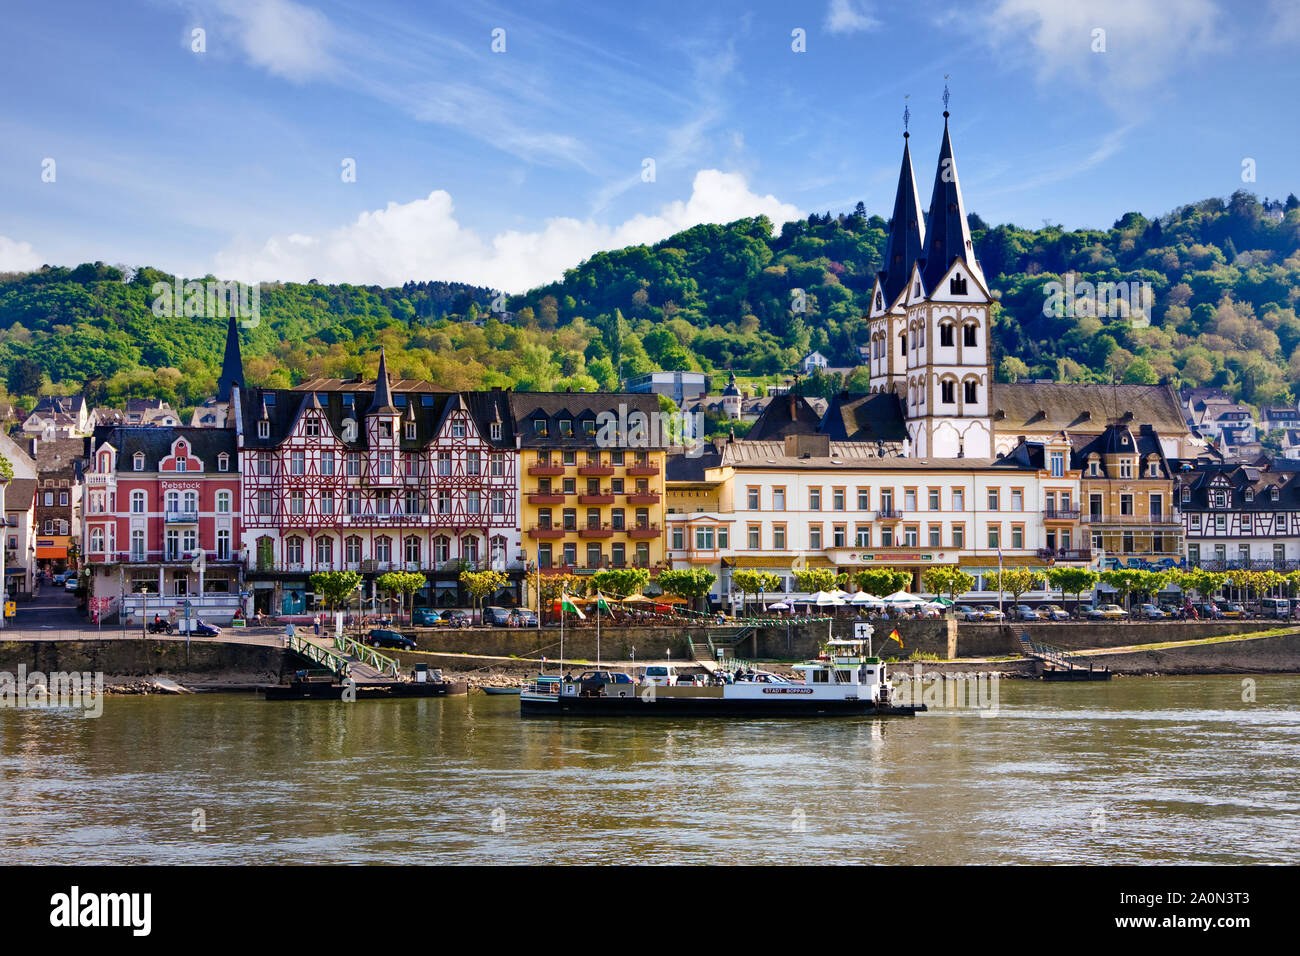 Boppard town on the River Rhine, Rhineland, Germany Stock Photo